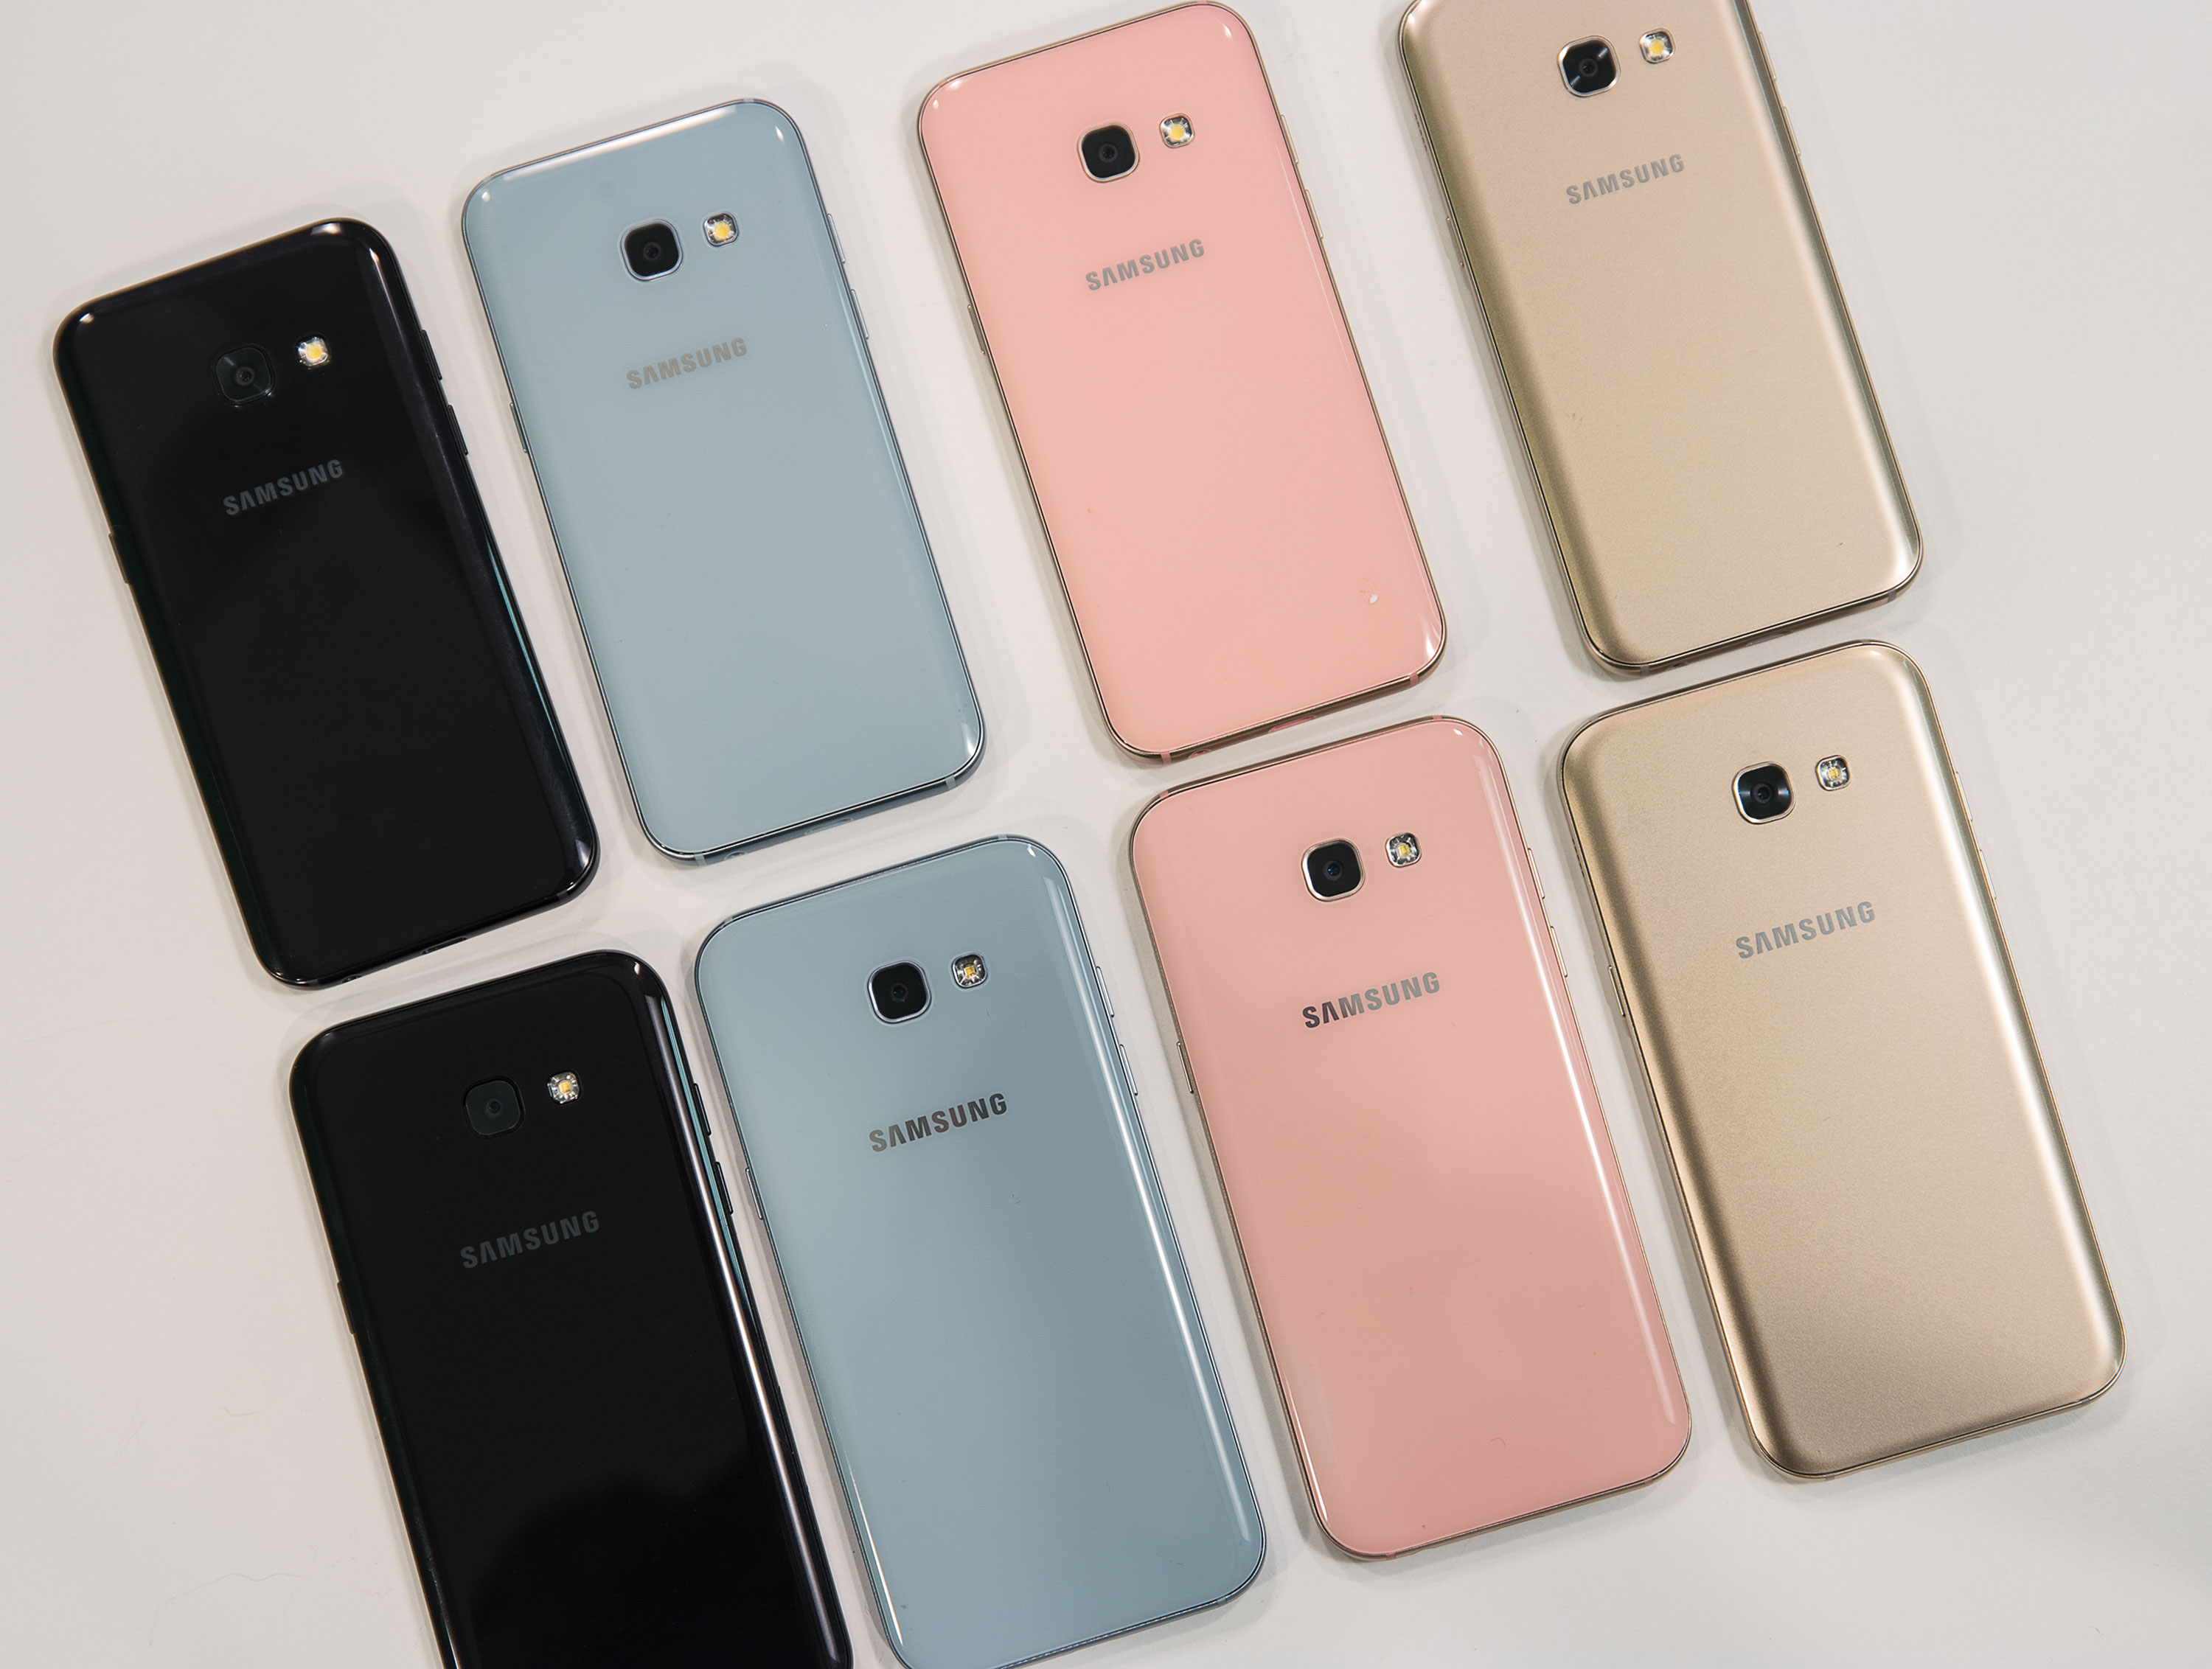 Телефоны самсунг а5 2017. Самсунг а5 2017 цвета. Самсунг а52 цвета корпуса. Samsung Galaxy a3 (2017) цвета корпуса. Самсунг а31 цвета корпуса.